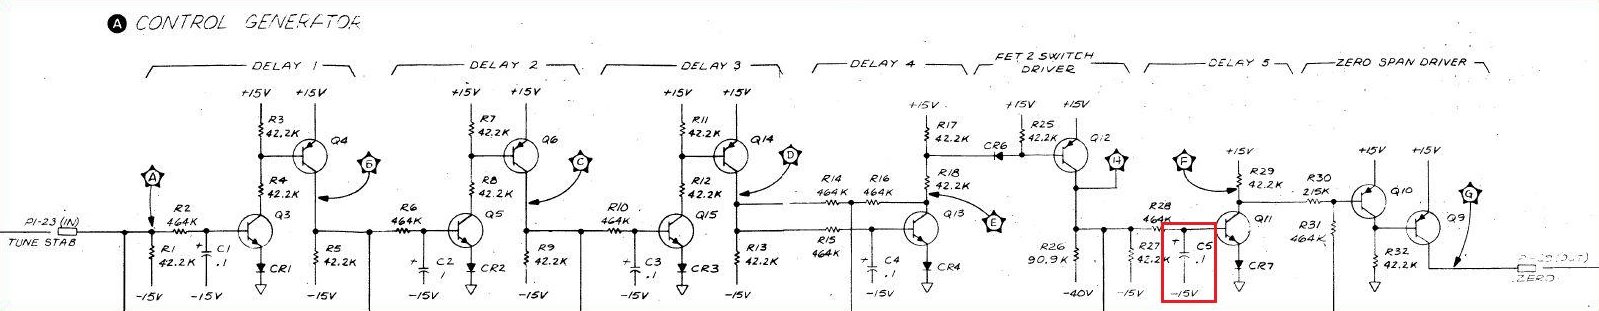 08565-60018 control generator schematic